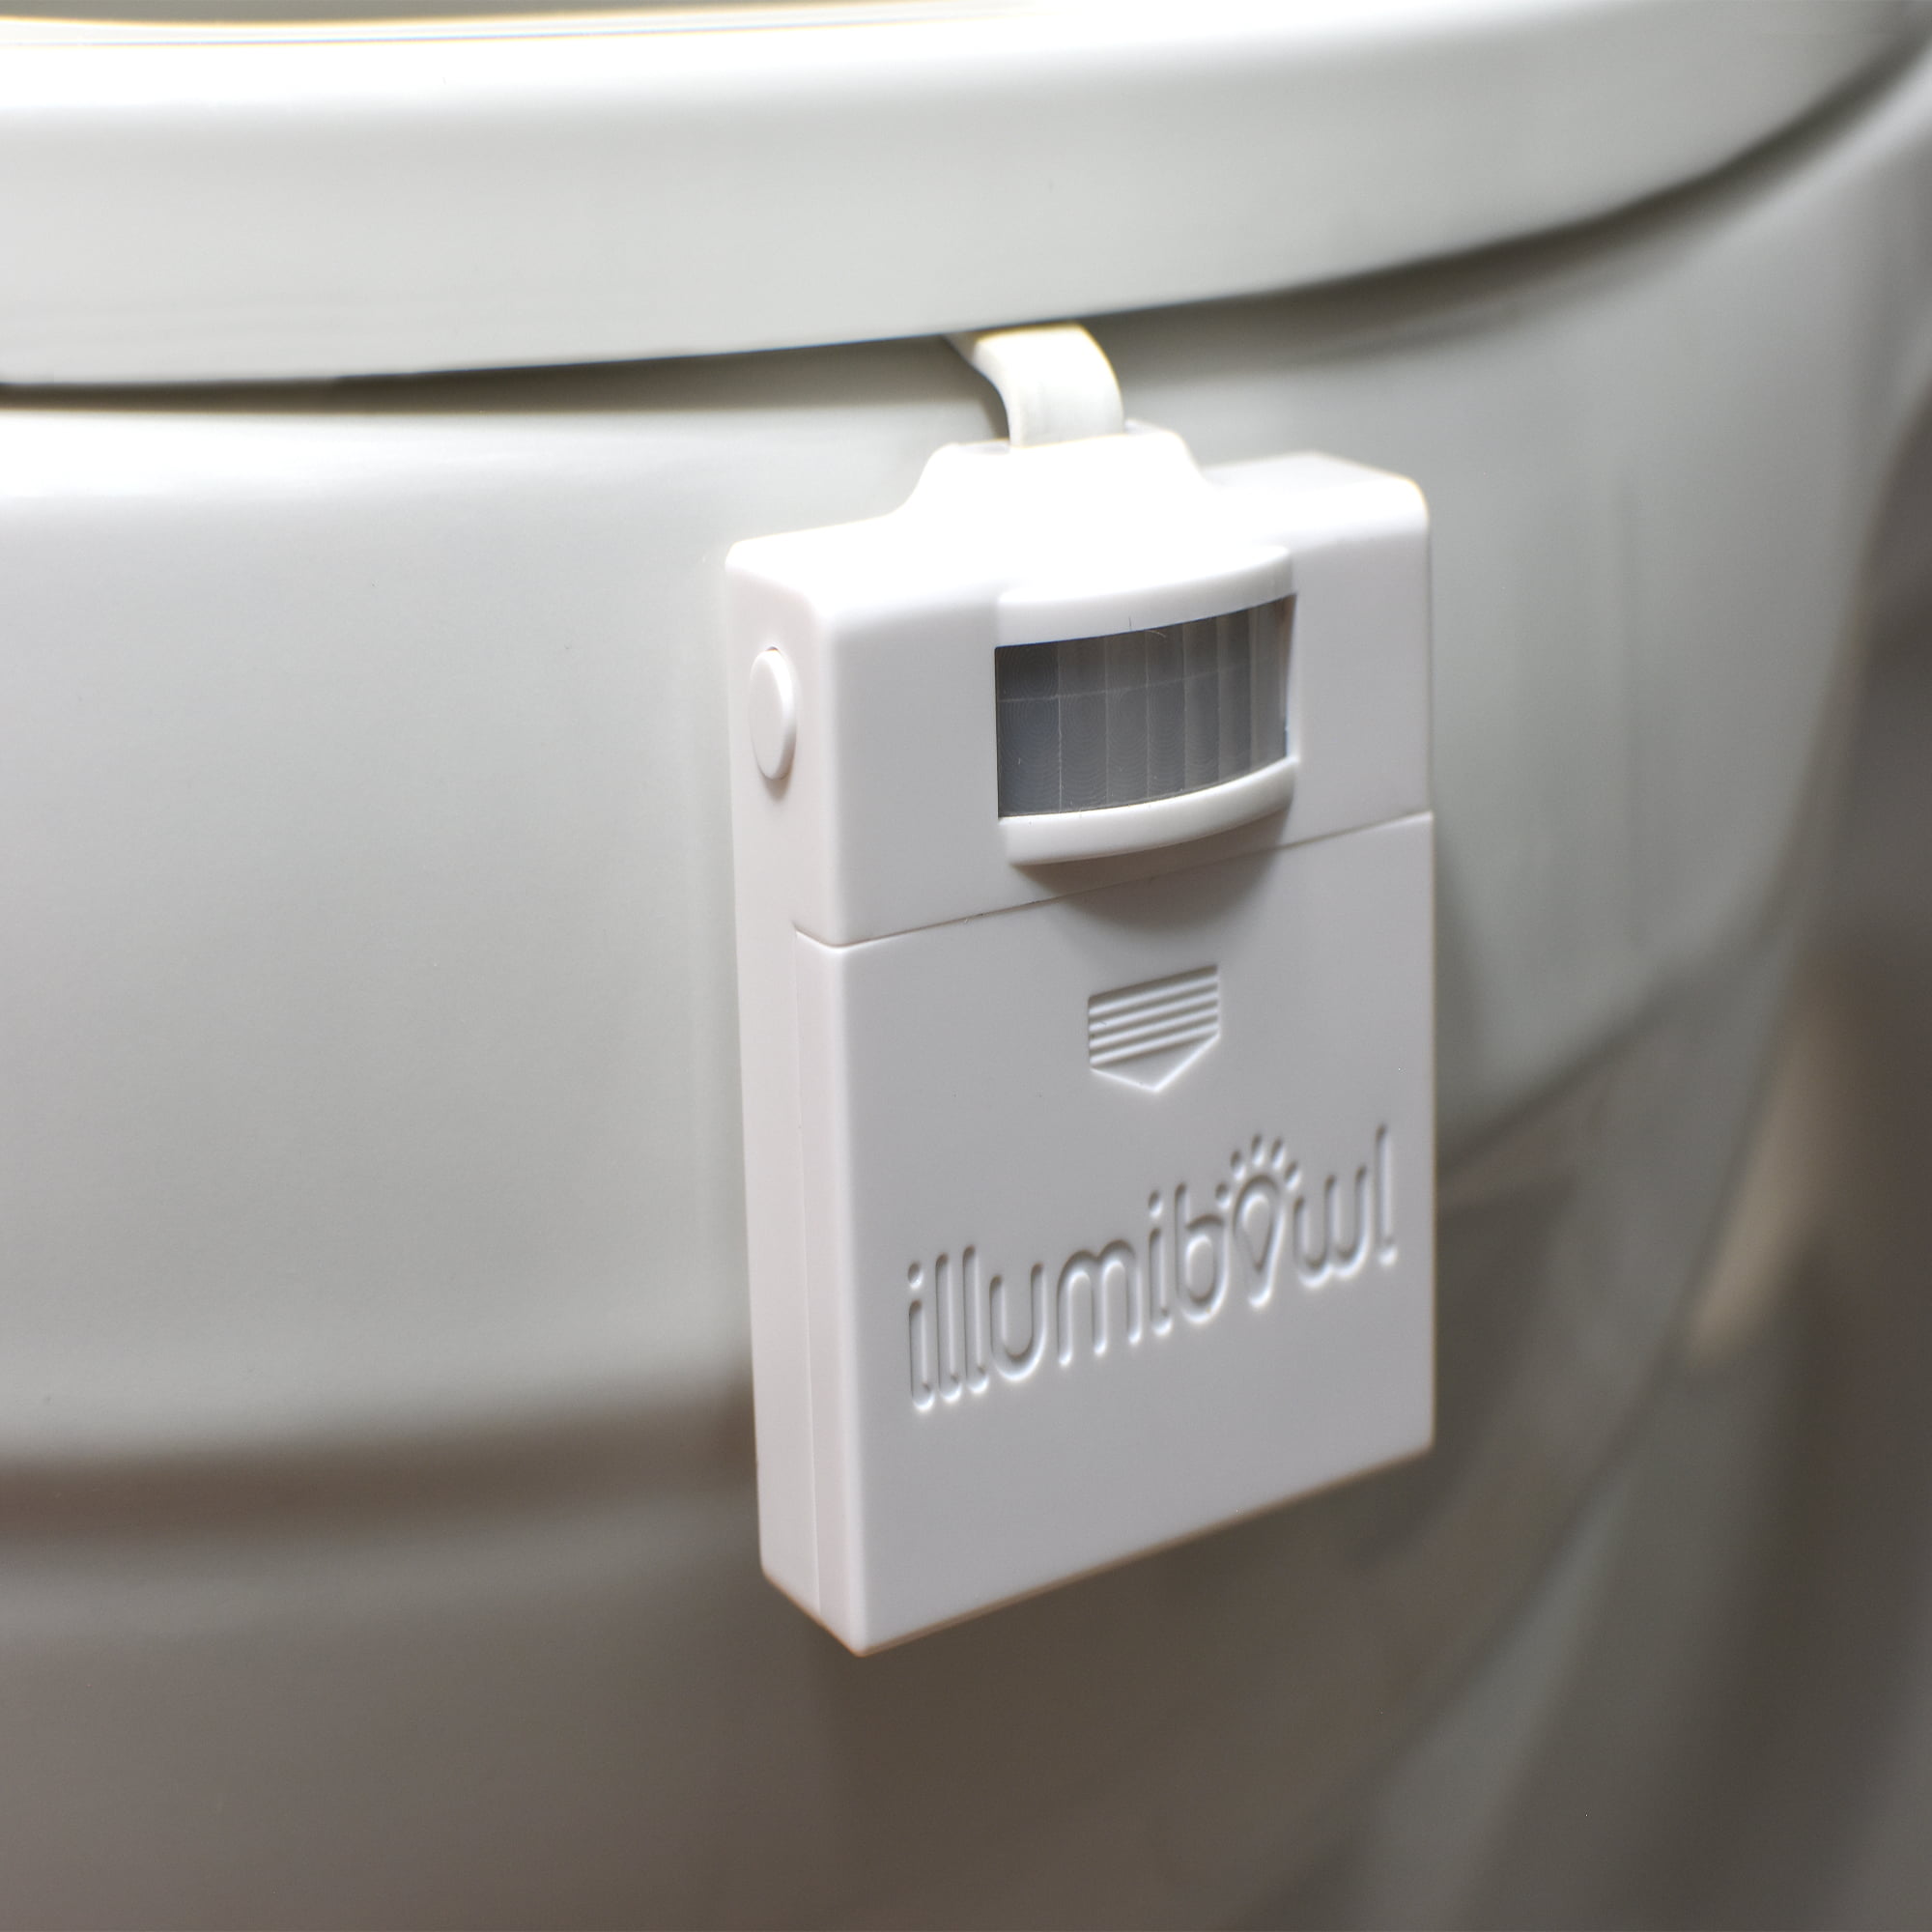 EMOJI illumibowl Toilet Projector Night Light NEW IN BOX for POTTY